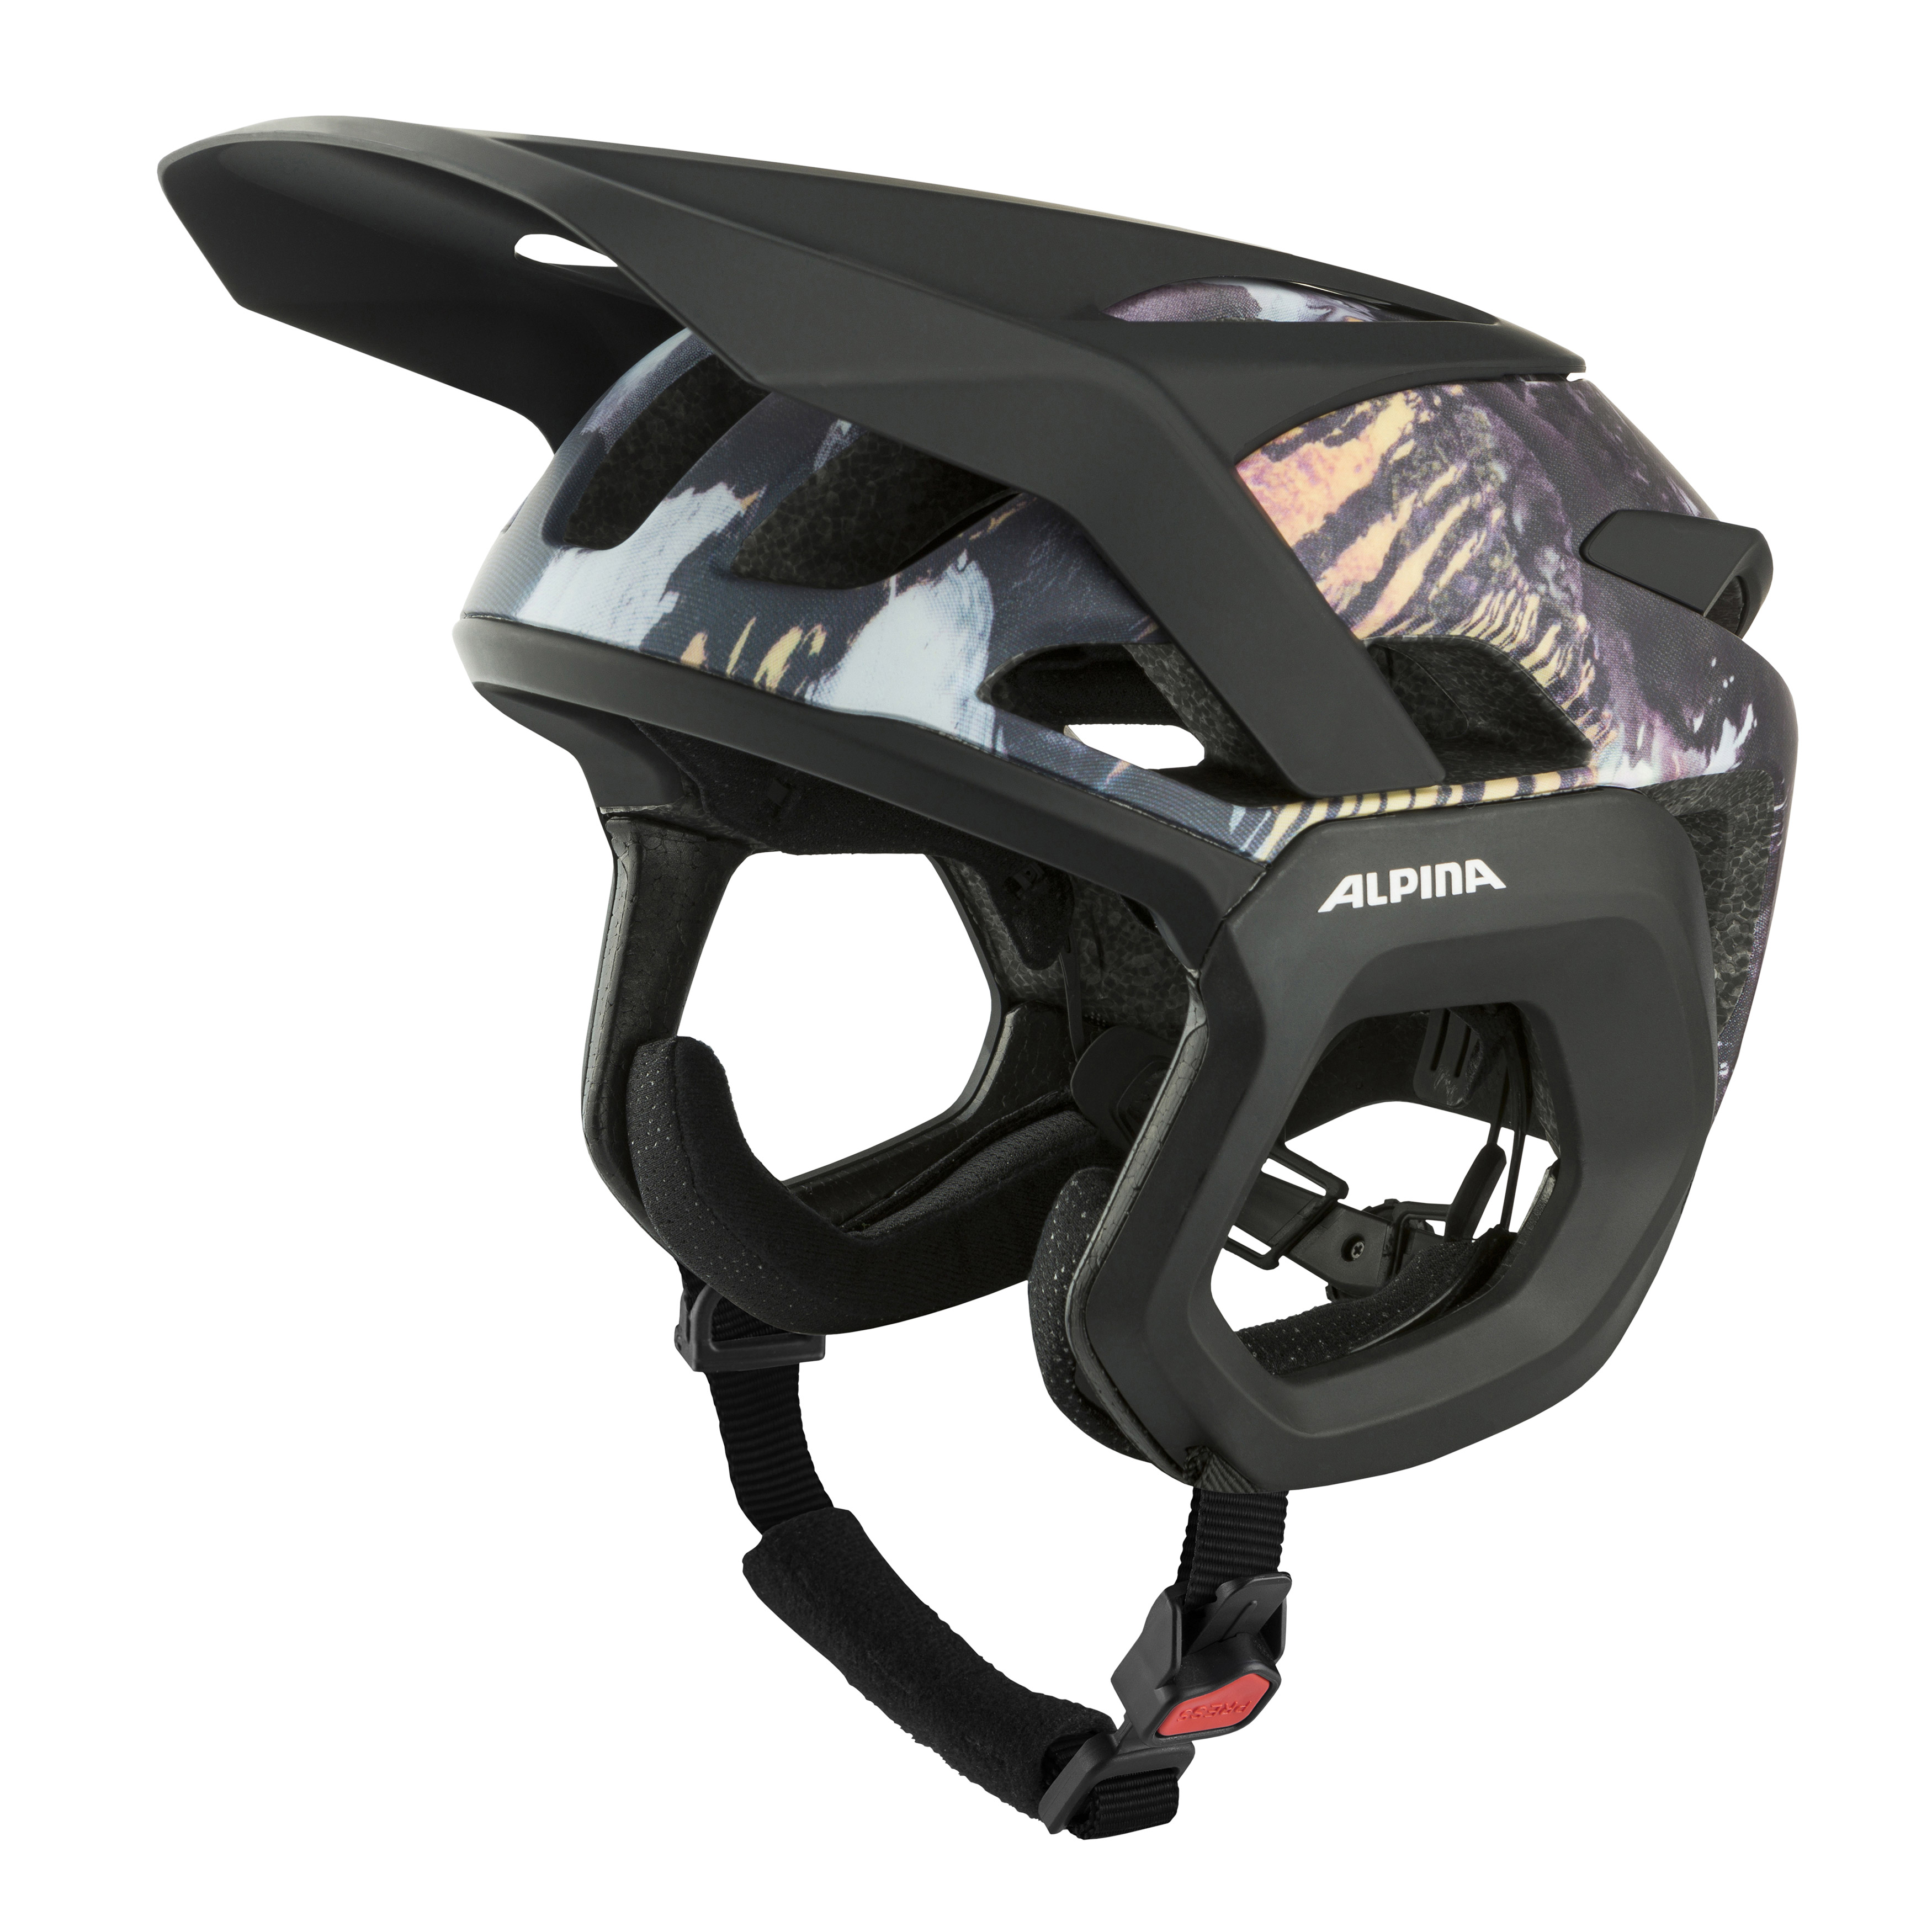 Alpina Fahrrad Helm schwarz